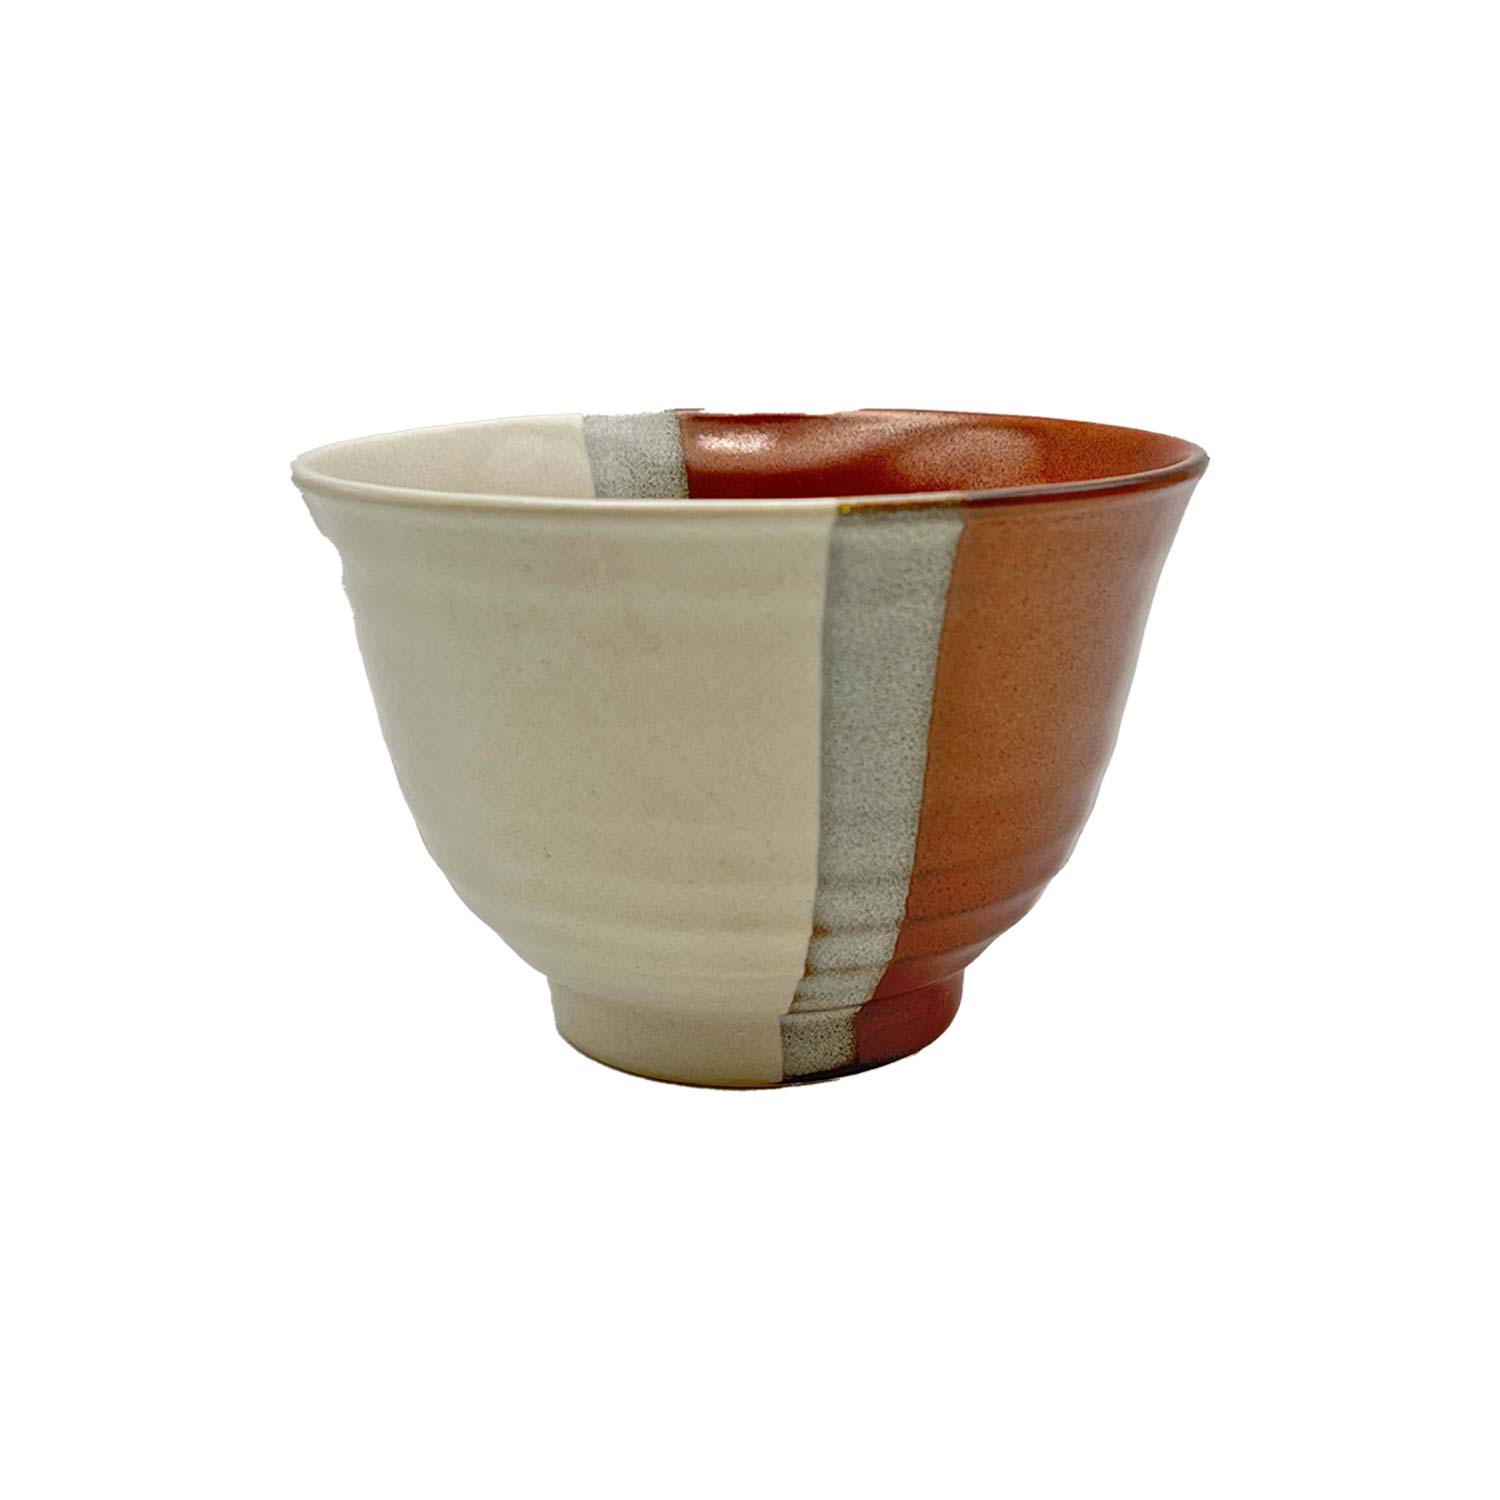 Teeschale aus Keramik braun-beige, 400 ml